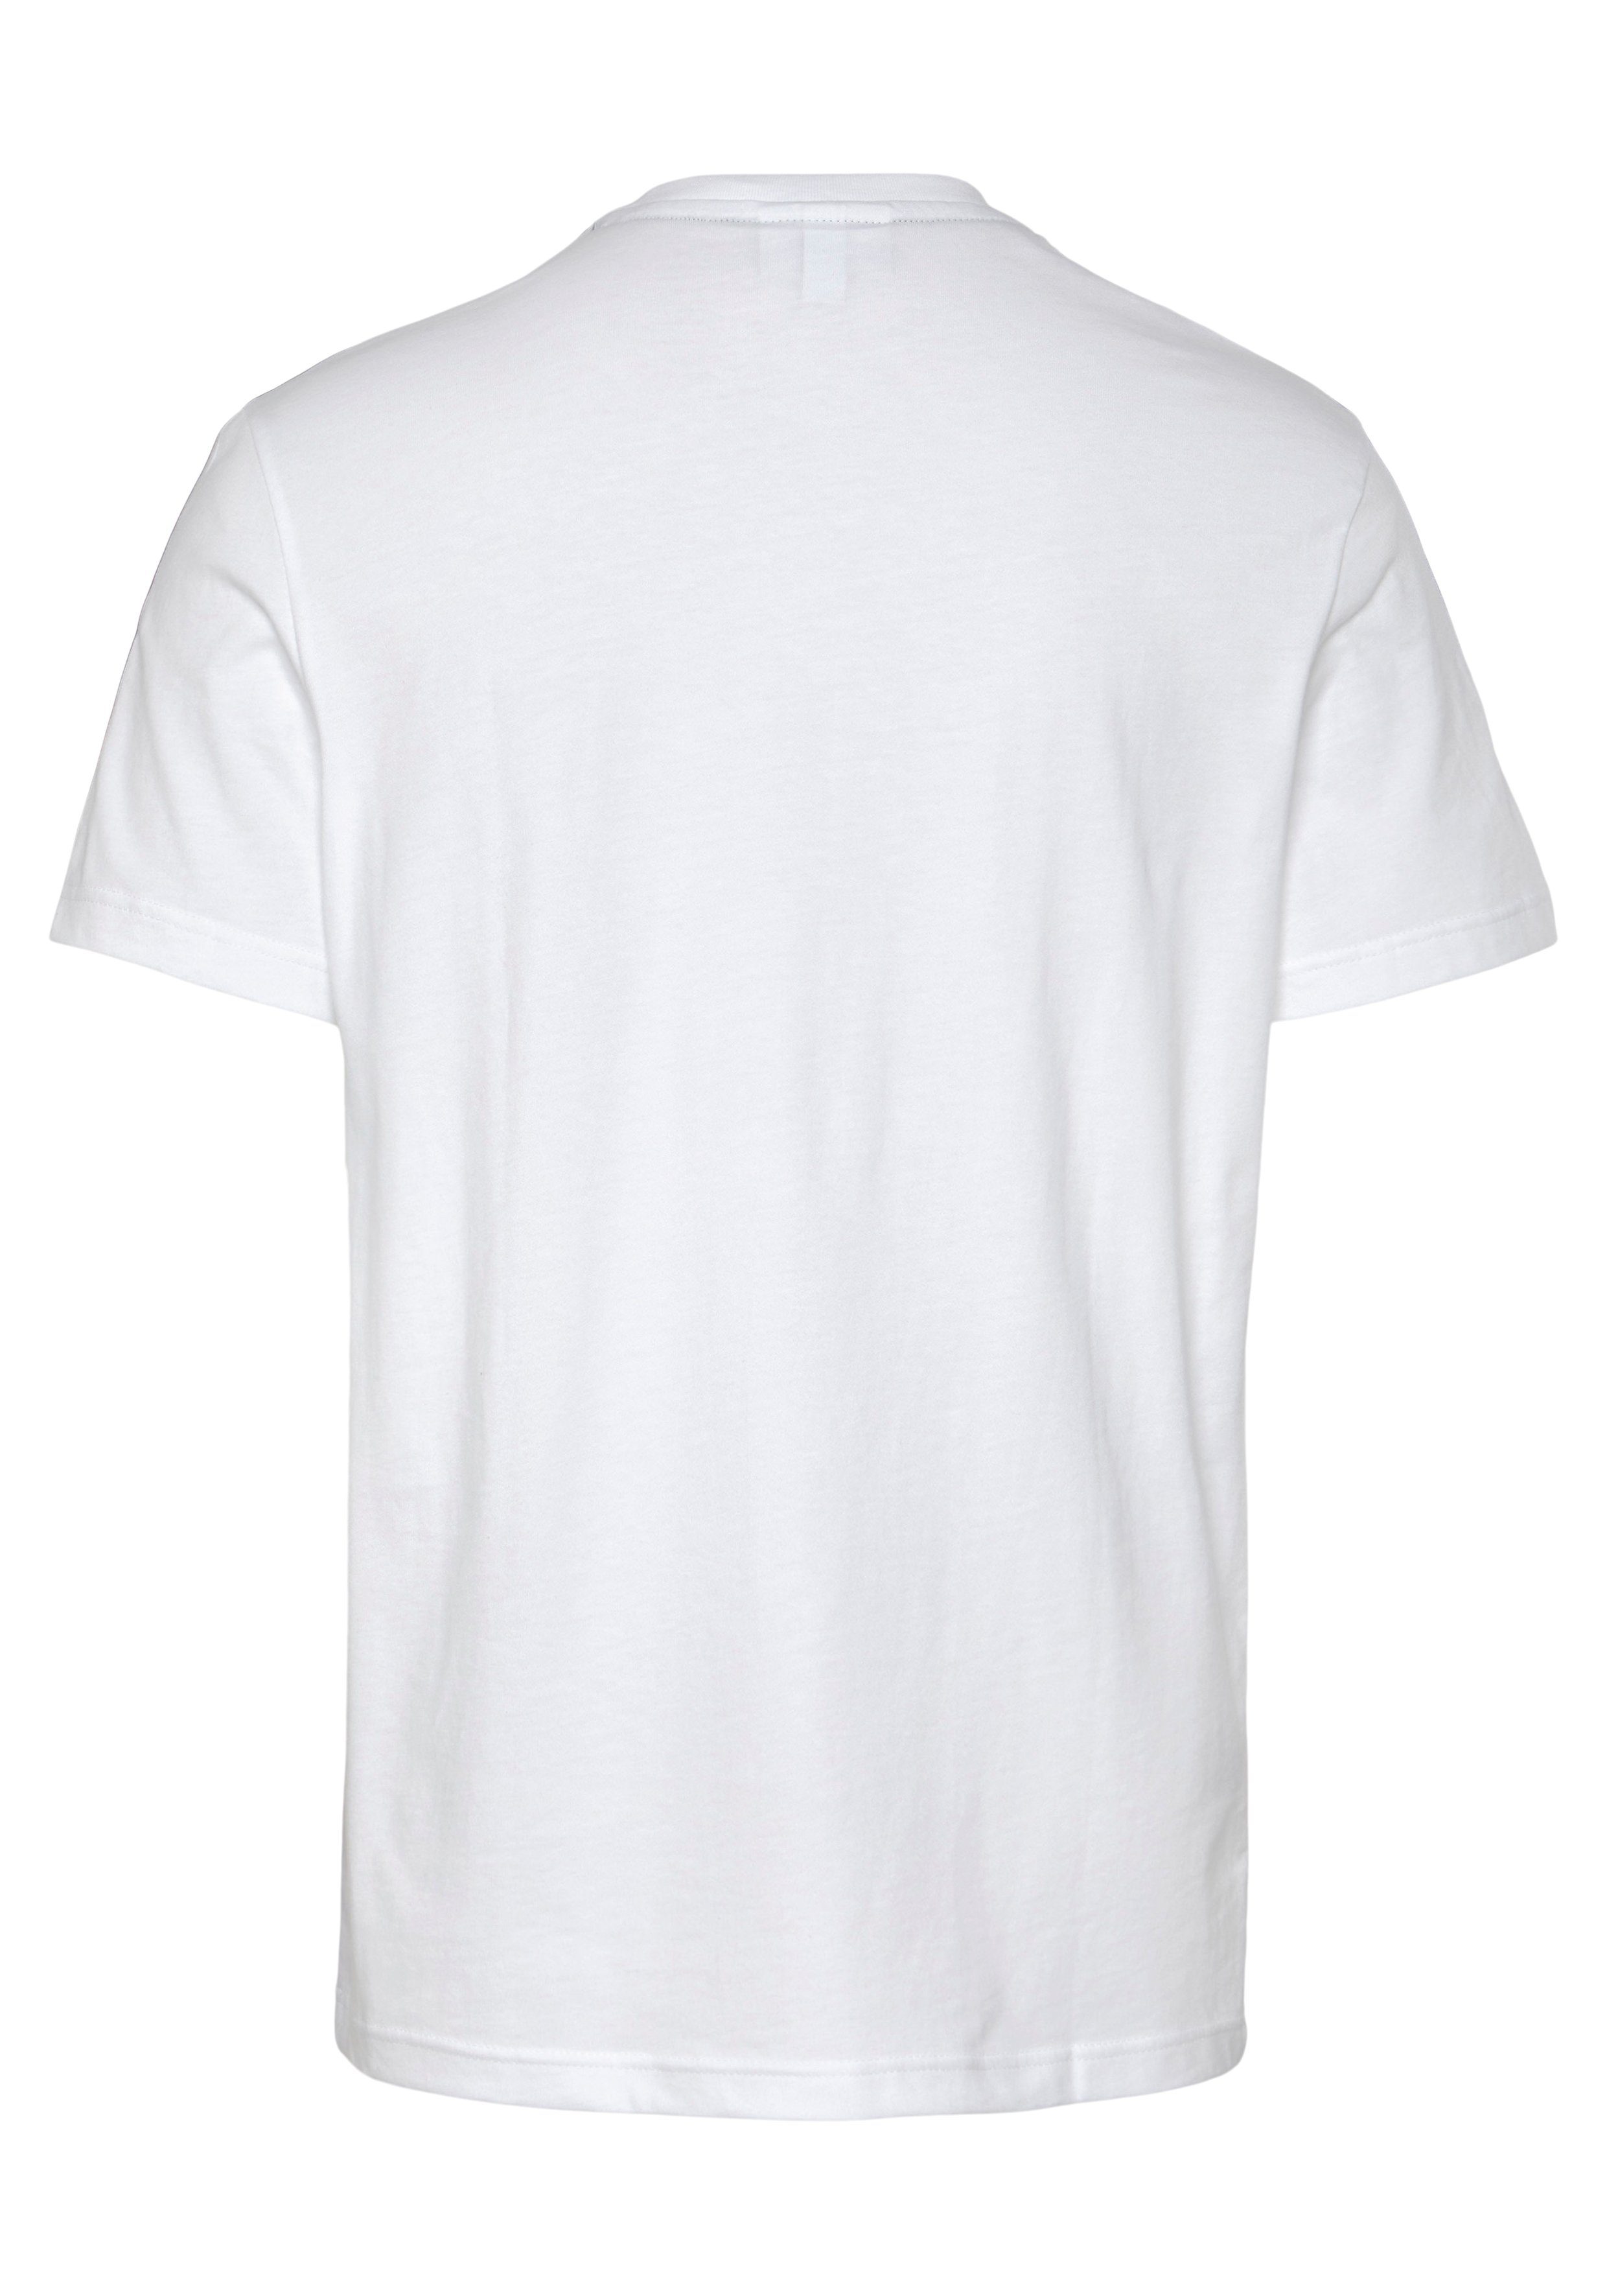 Lacoste T-Shirt beschriftetem white an mit Schultern Kontrastband den